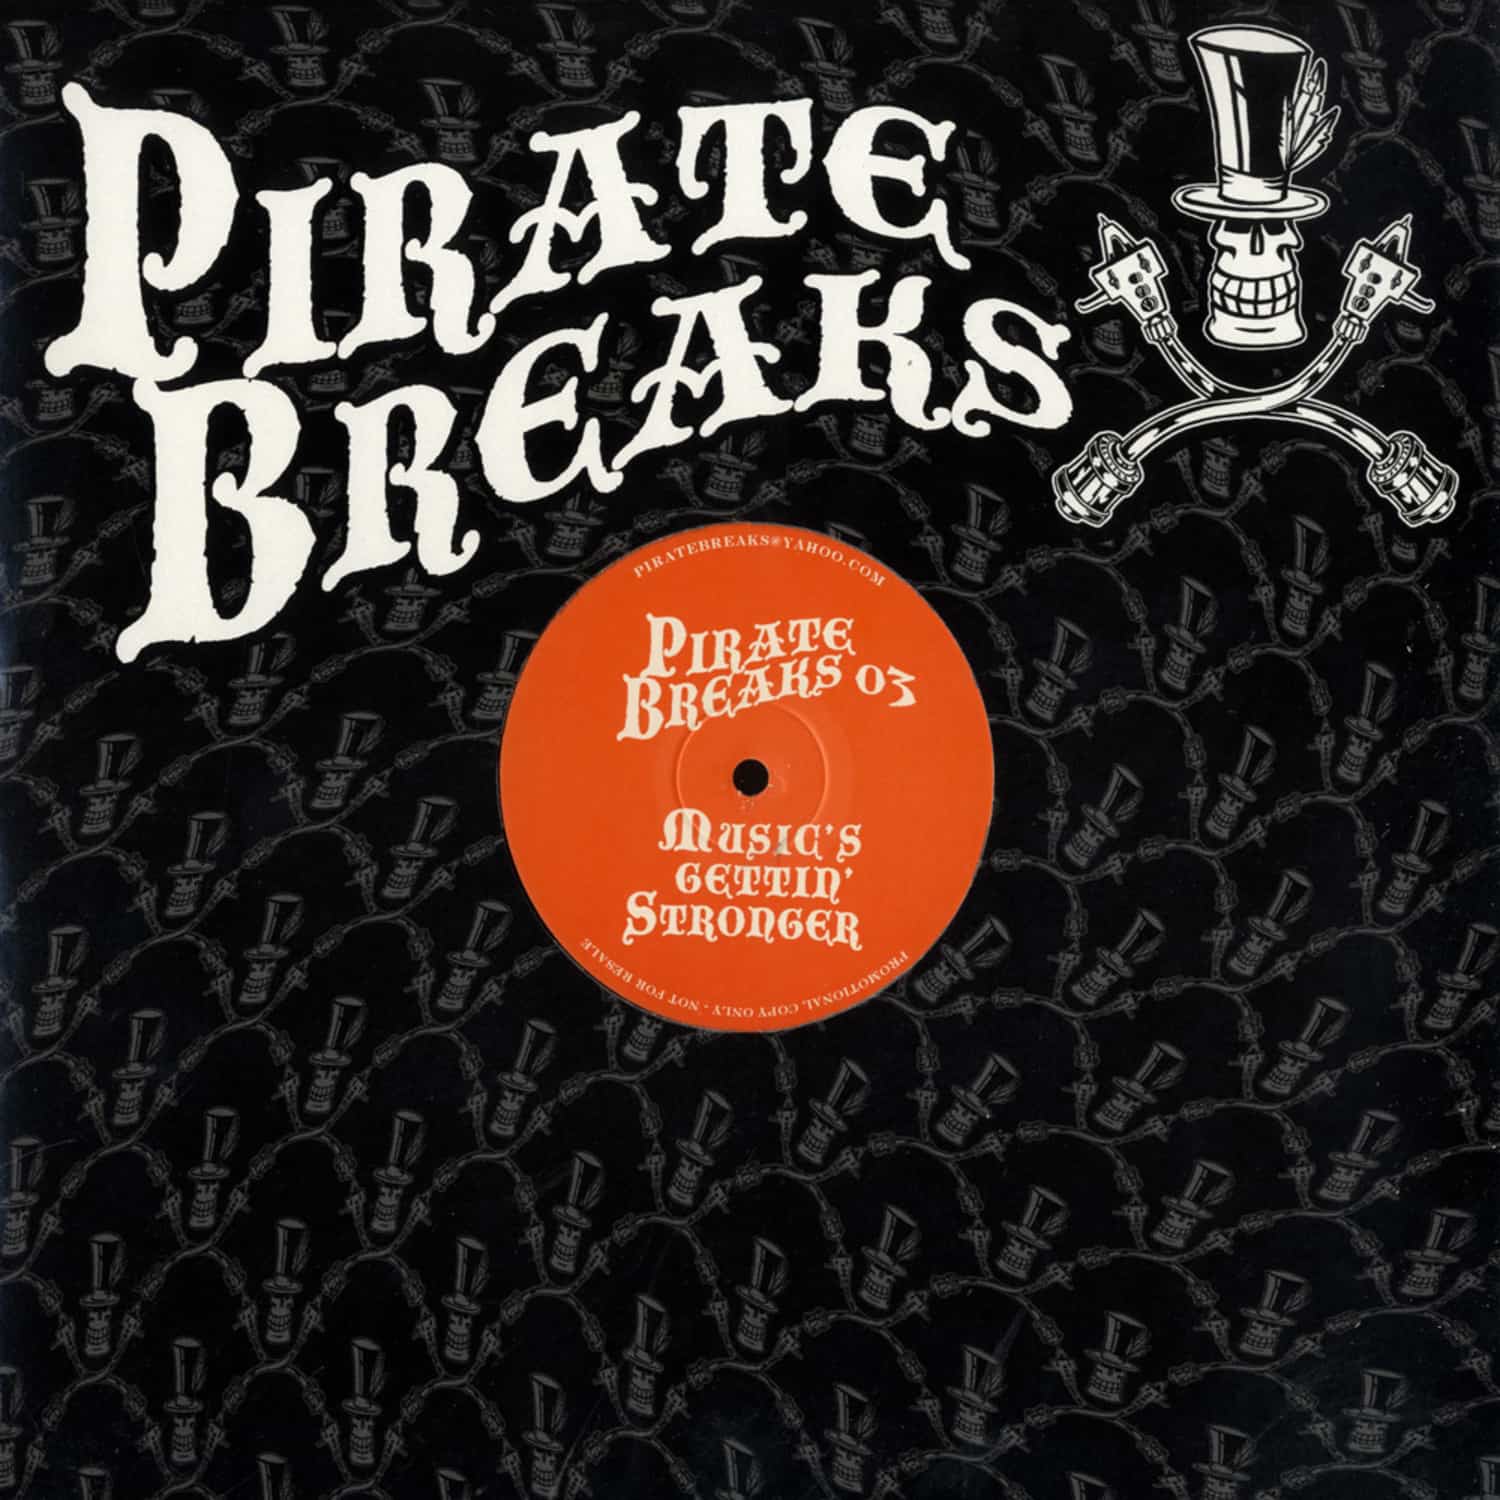 Pirate Breaks 03 - MUSICS GETTING STRONGER